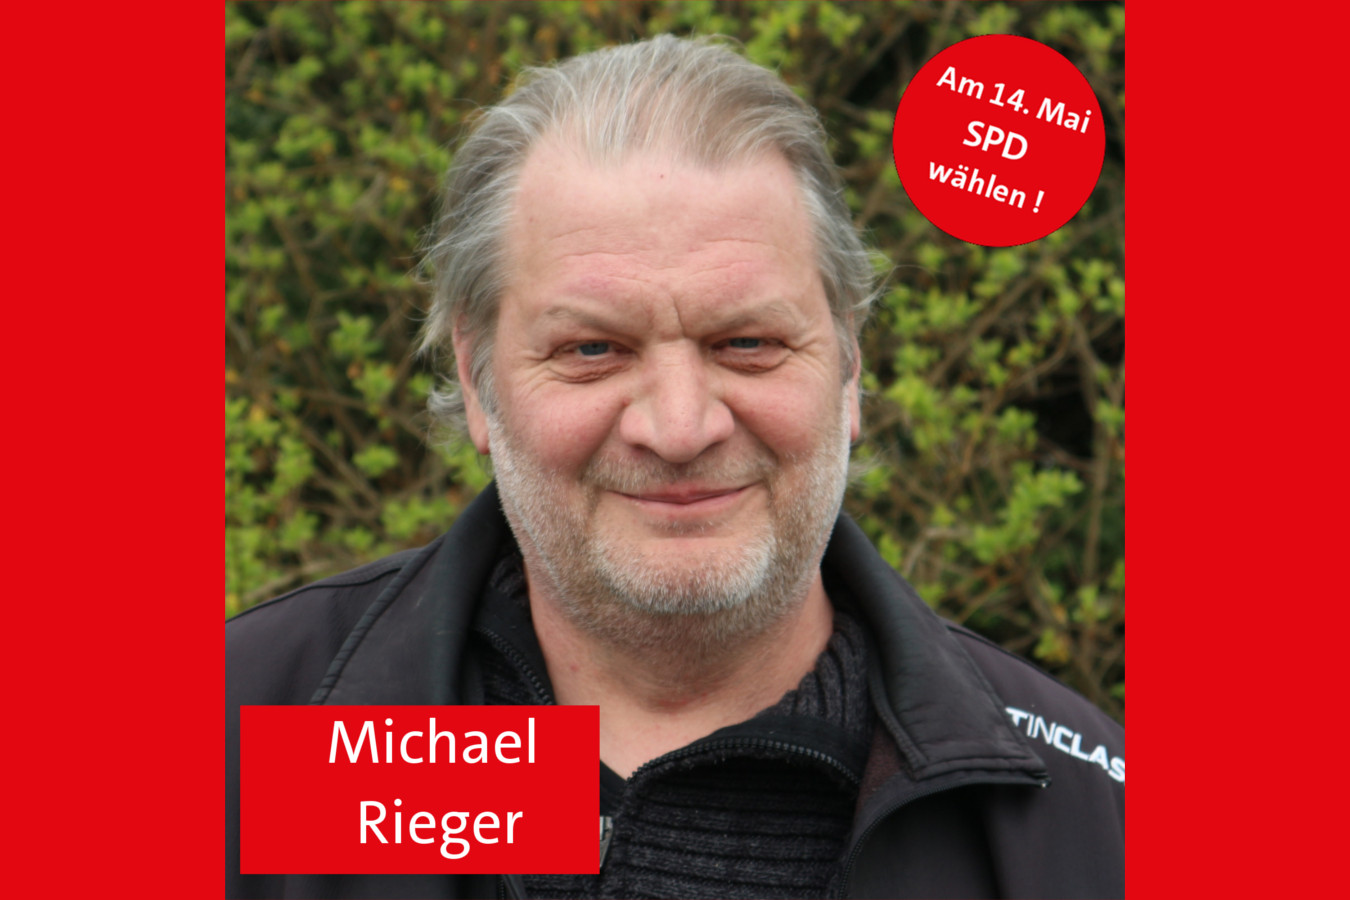 Michel Rieger